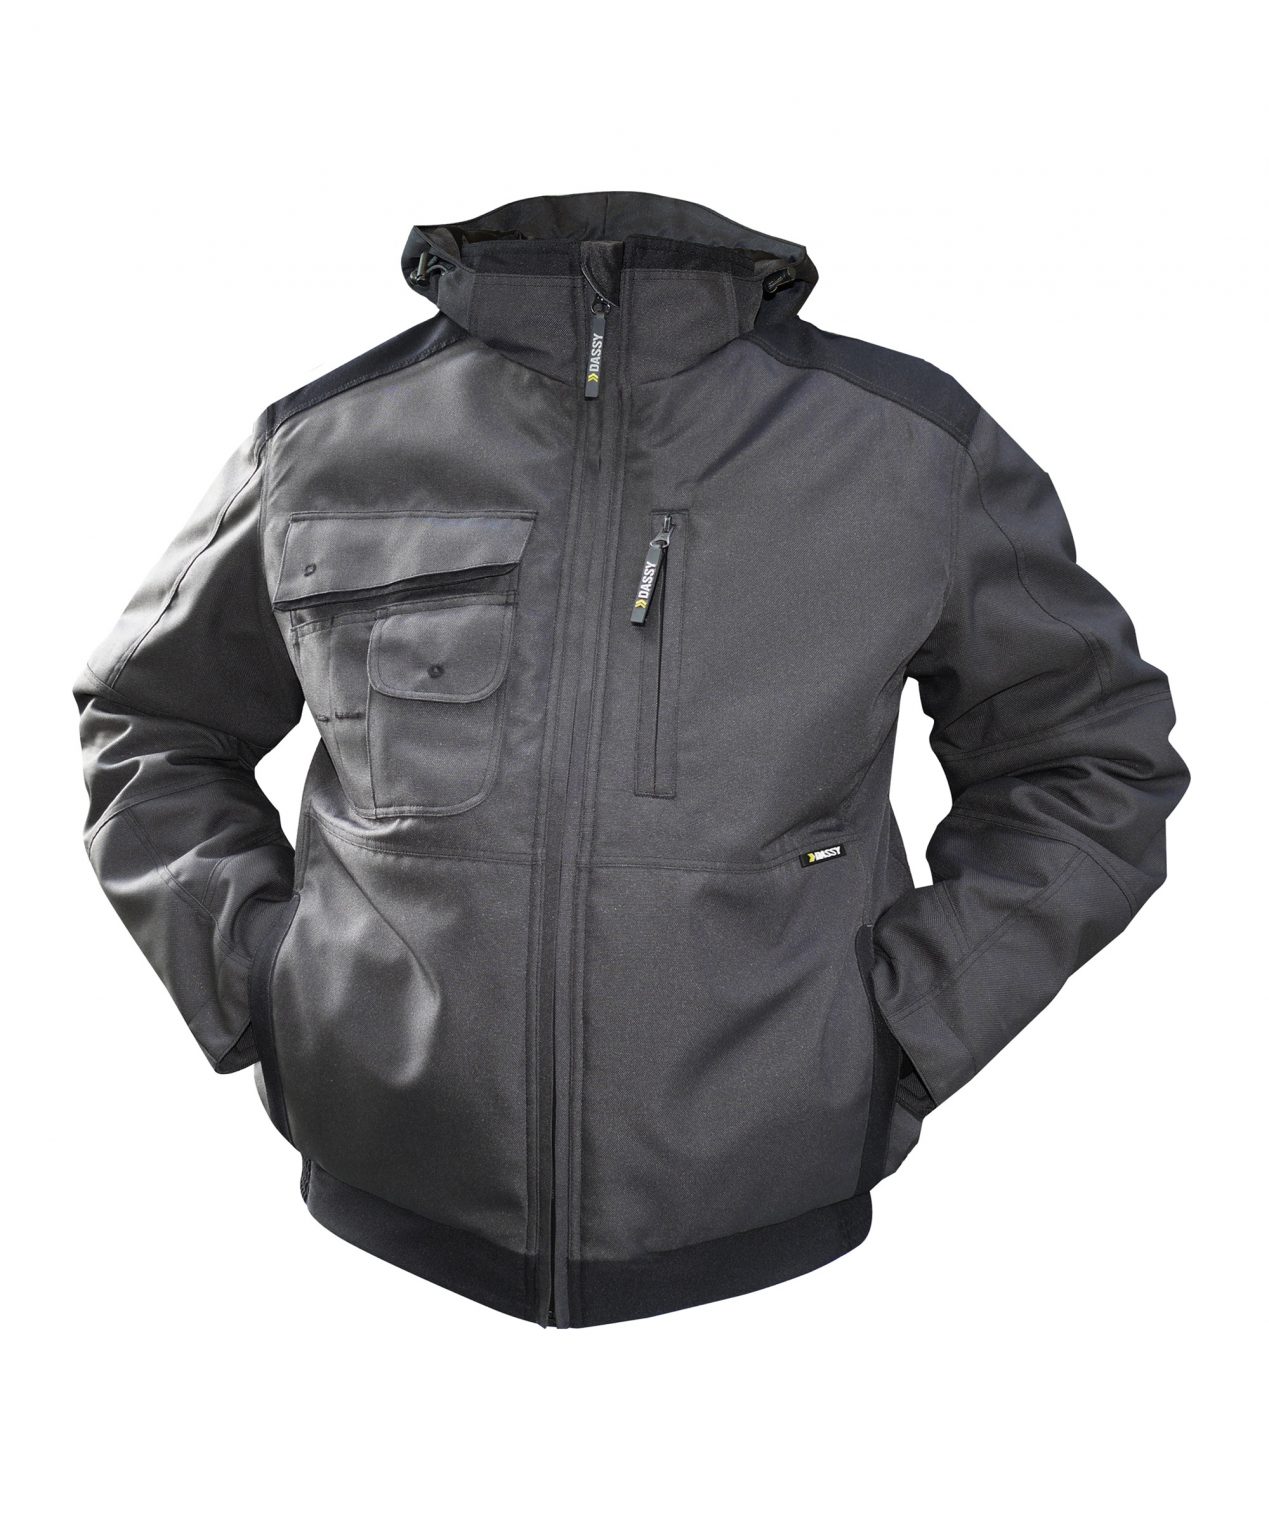 austin canvas winter jacket anthracite grey black front